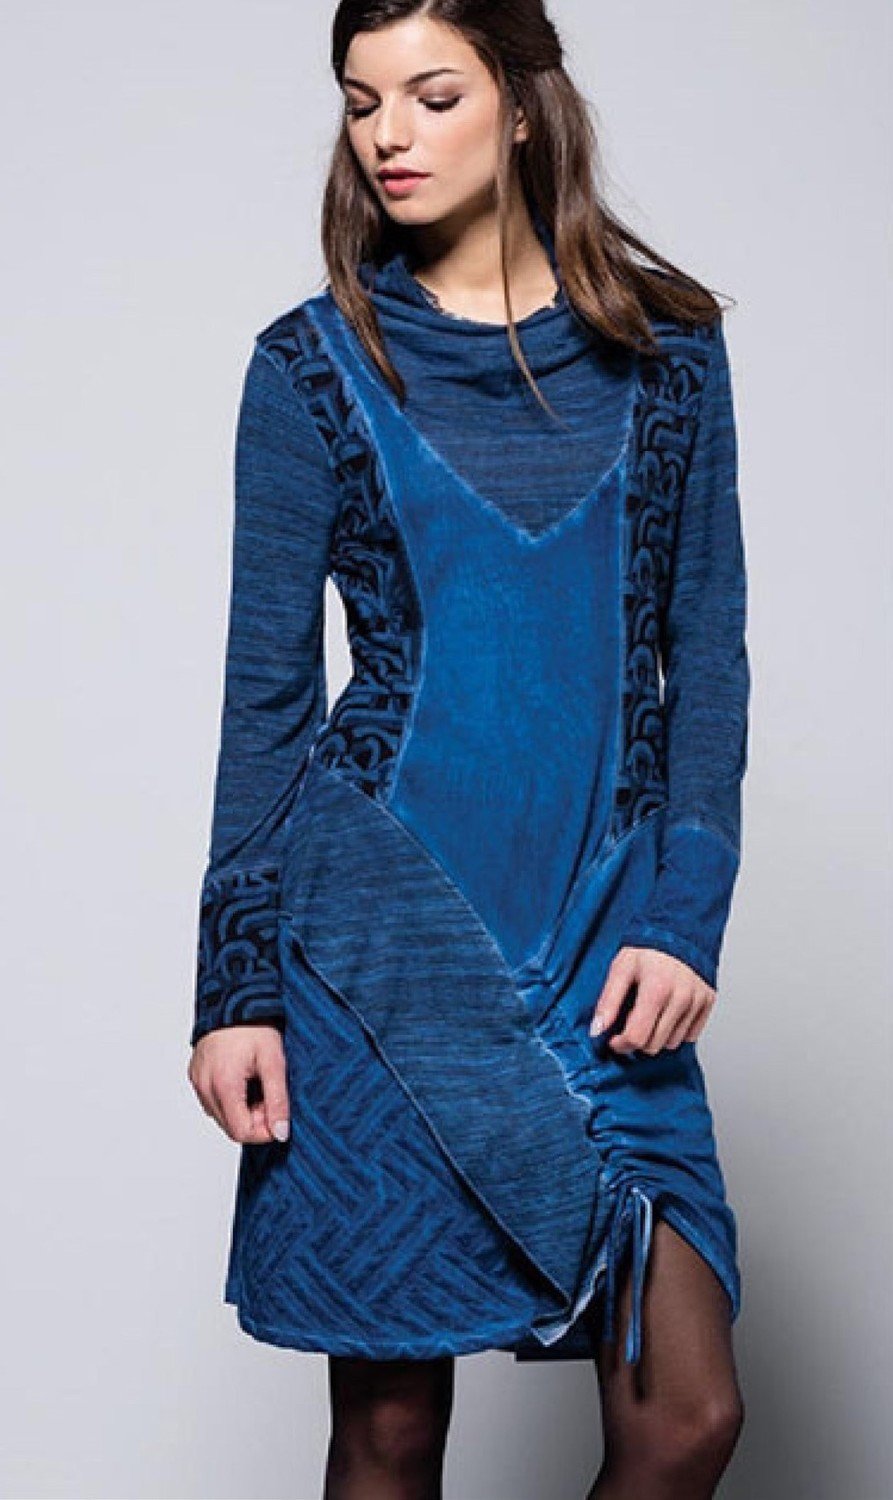 Maloka: Blue Crystal Rosette Asymmetrical Dress (Pale Black Only!)